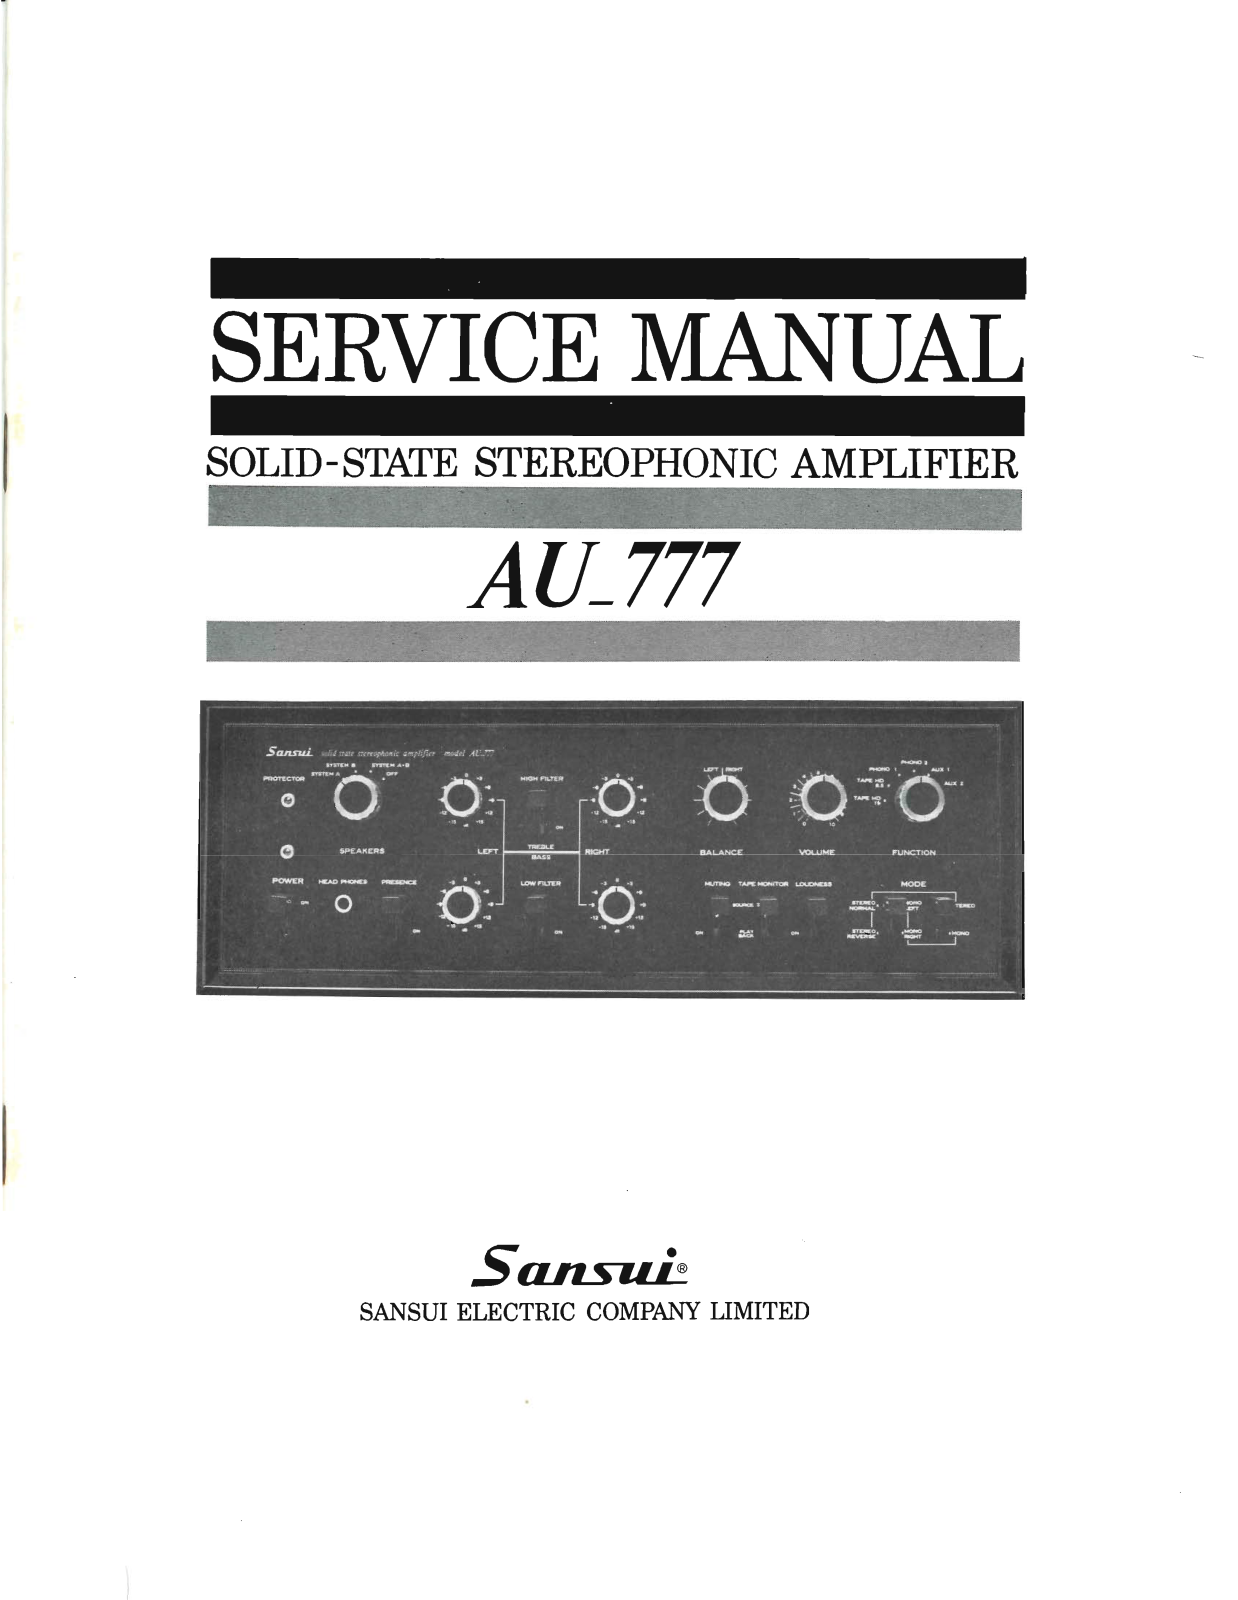 Sansui AU-777 Service Manual